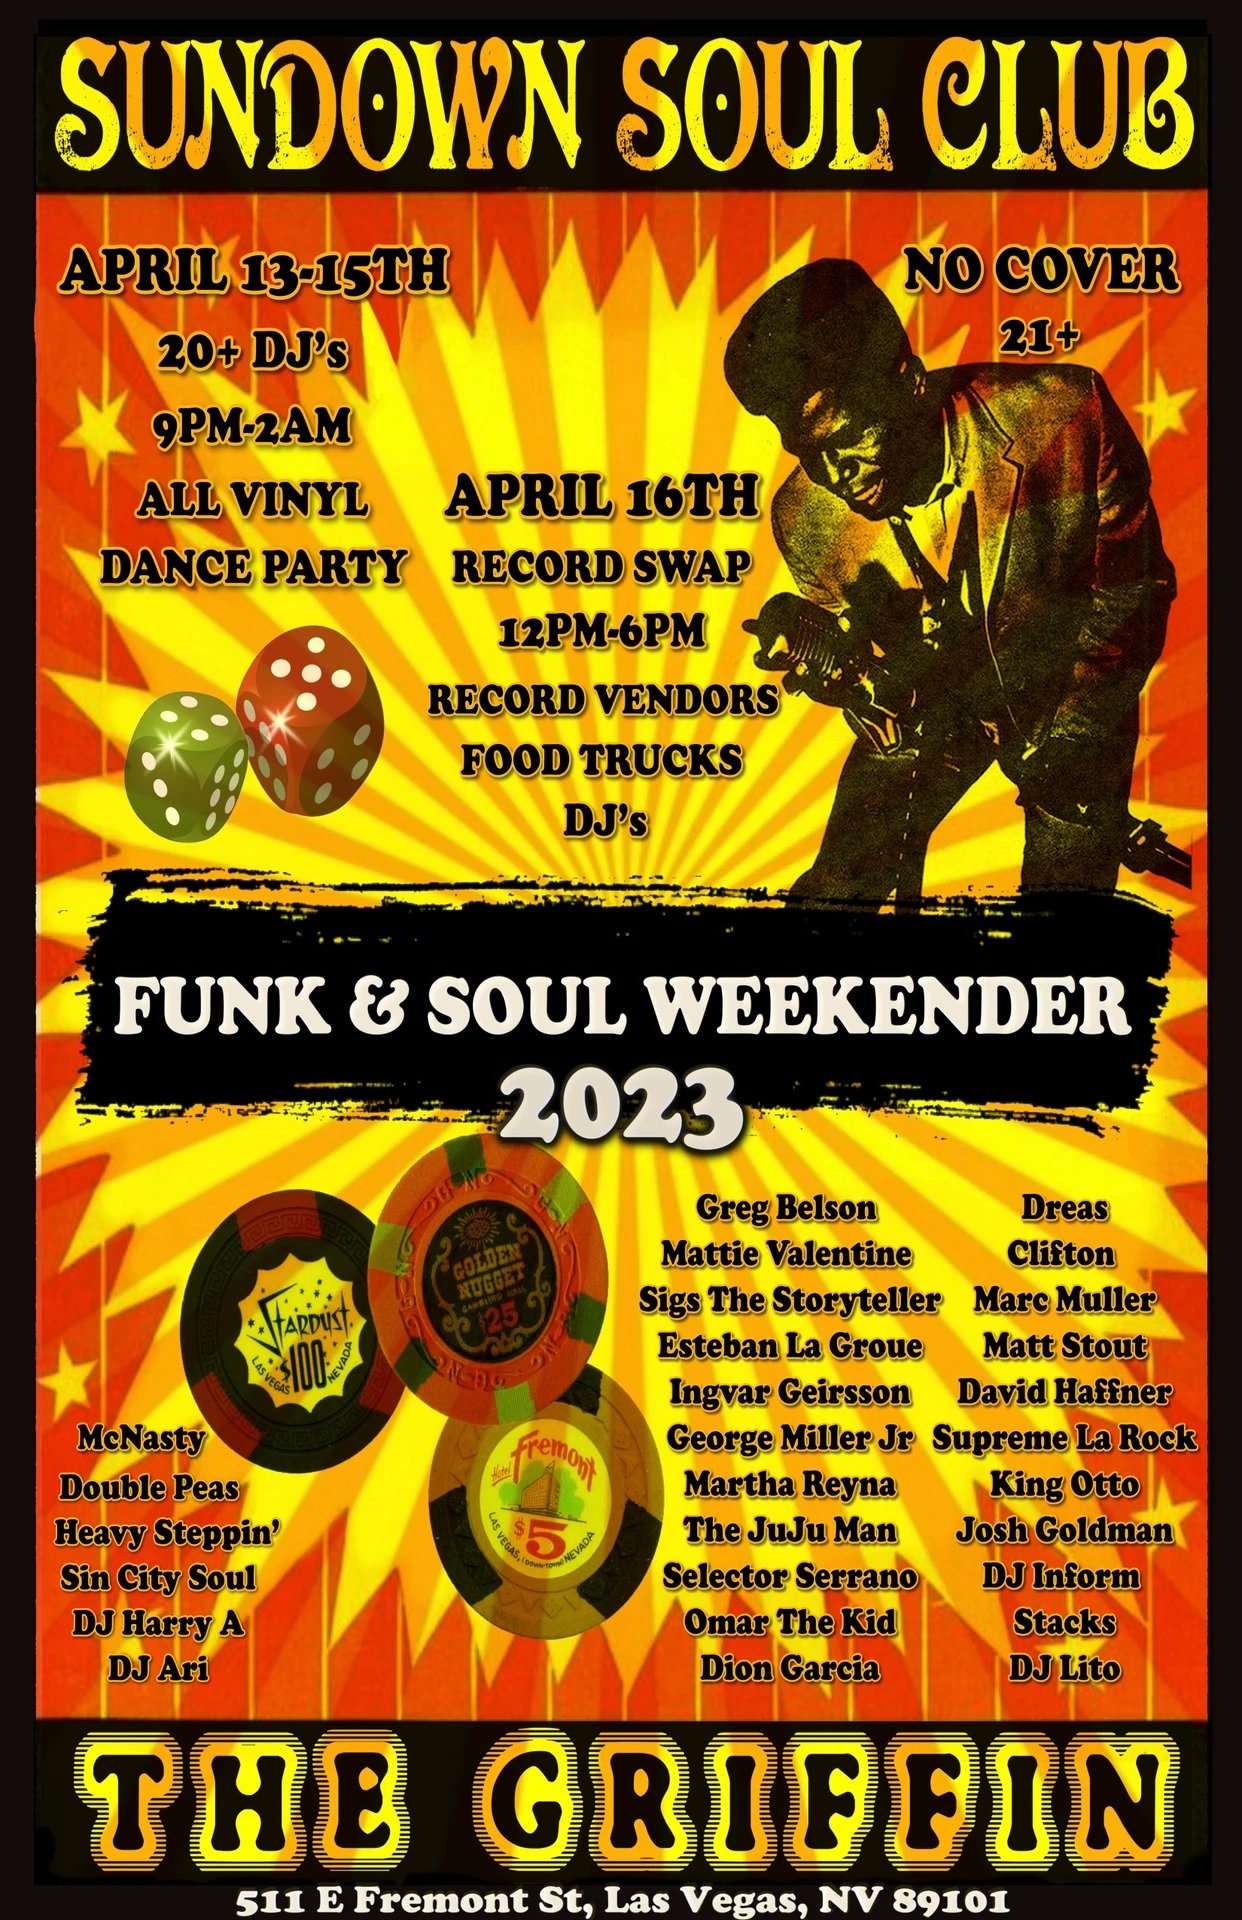 SDSC Las Vegas Funk & Soul Weekender 2023 Apr 1315 at The Griffin on